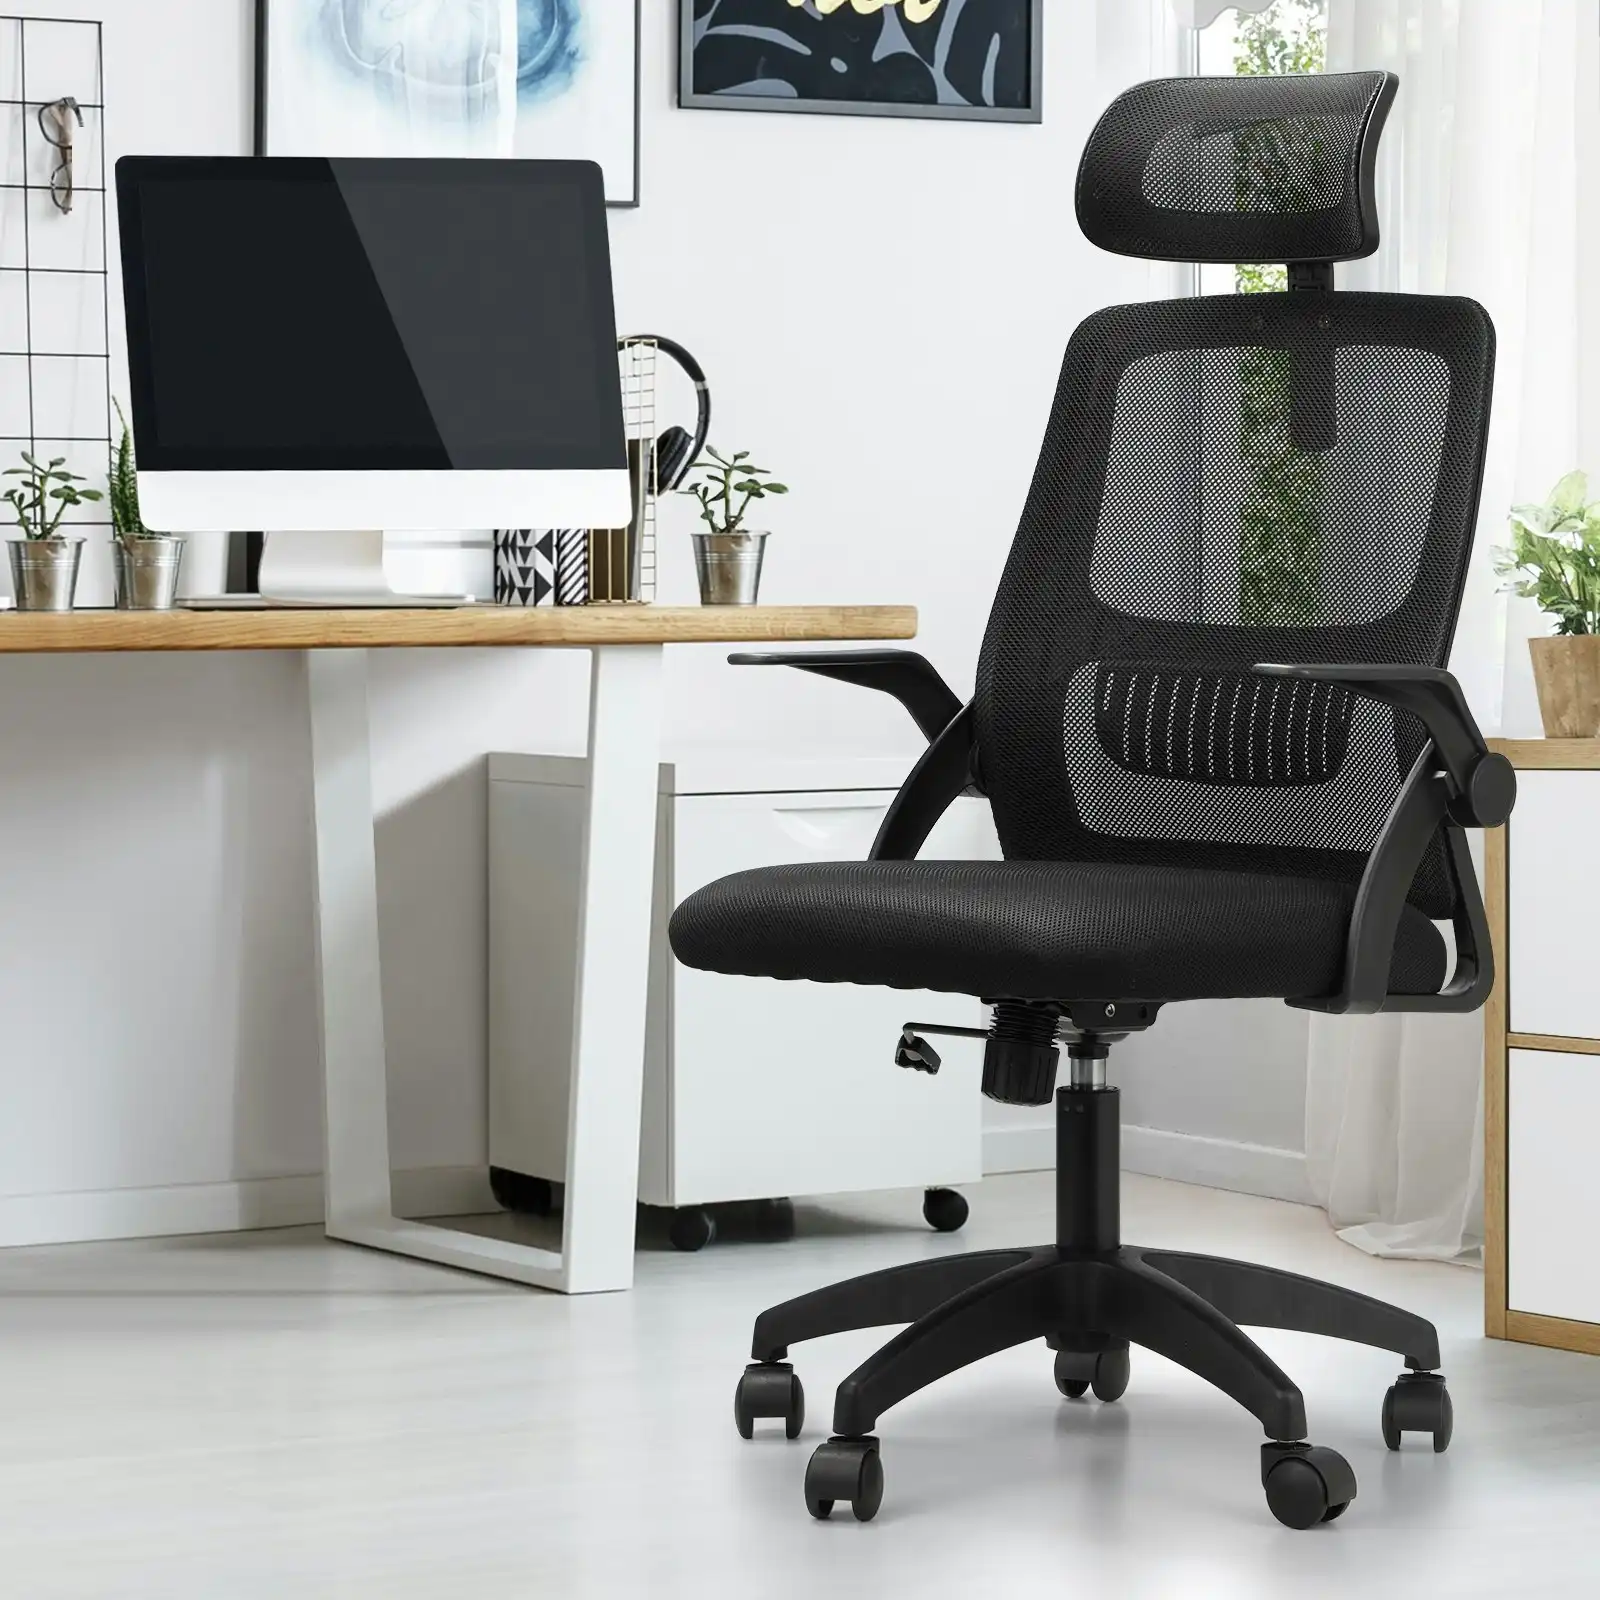 Oikiture Mesh Office Chair Executive Fabric Gaming Seat Racing Tilt Computer Black1